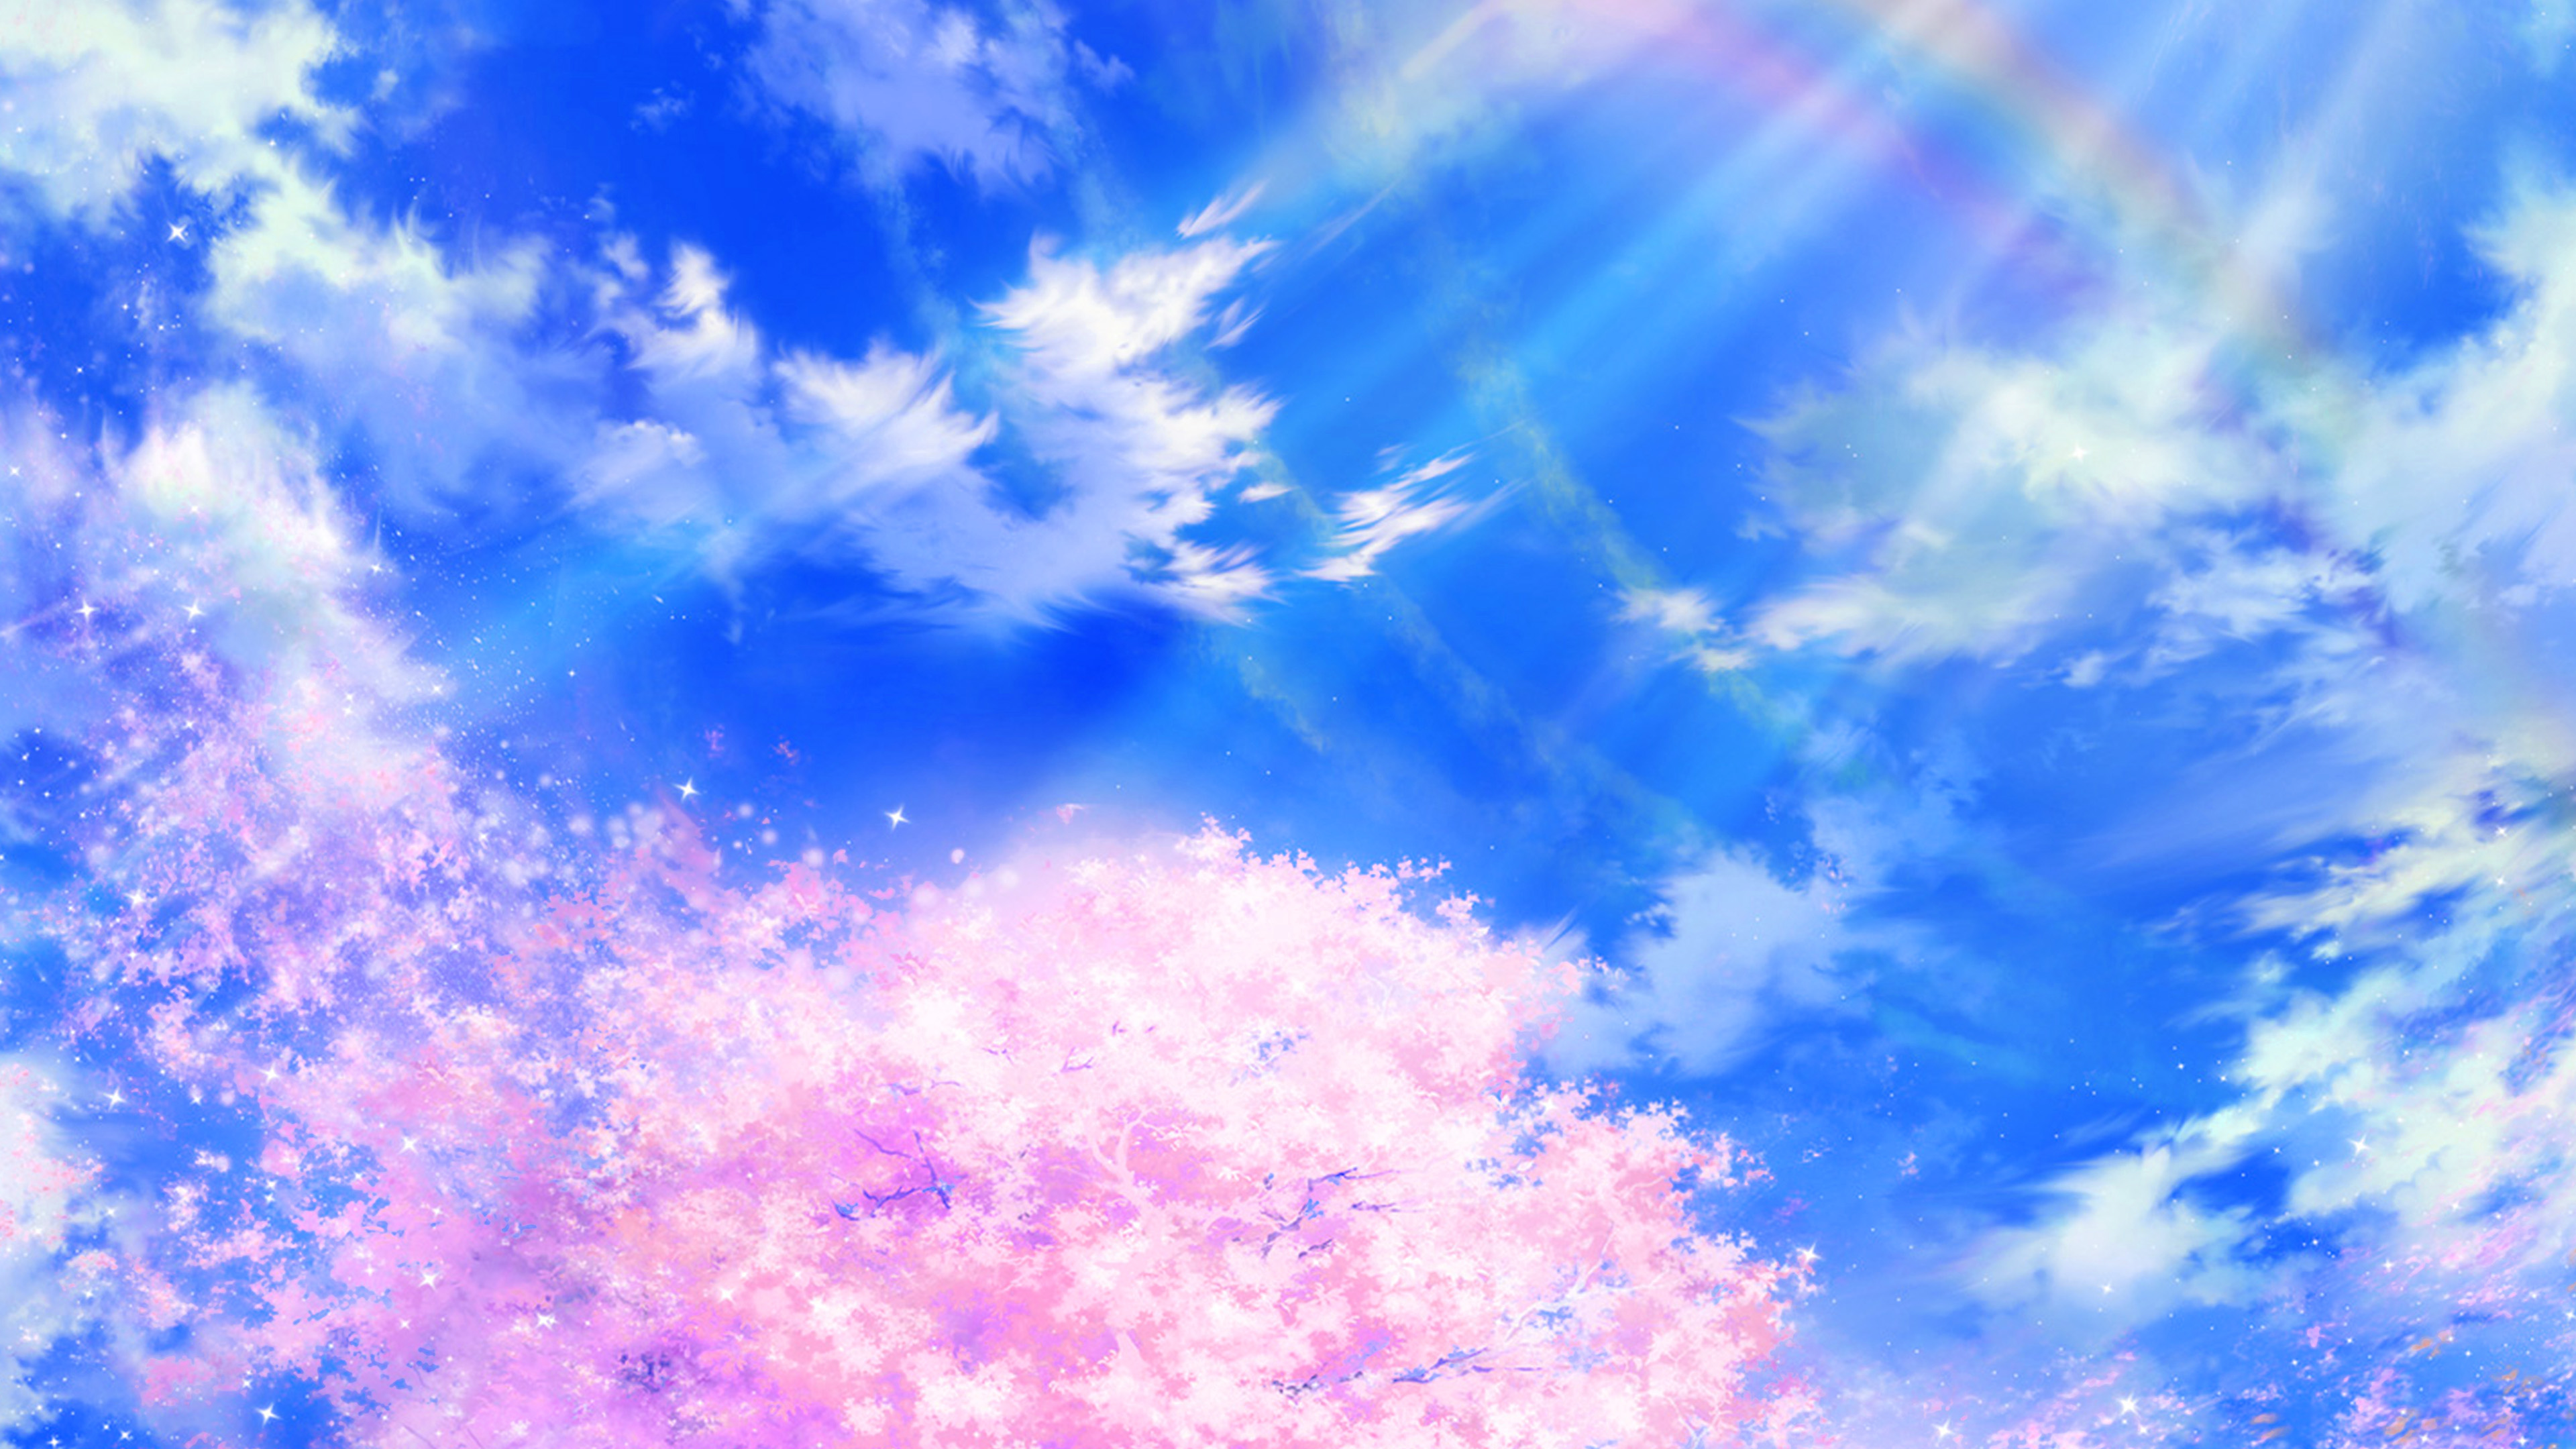 wallpaper for desktop, laptop. anime sky cloud spring art illustration blue